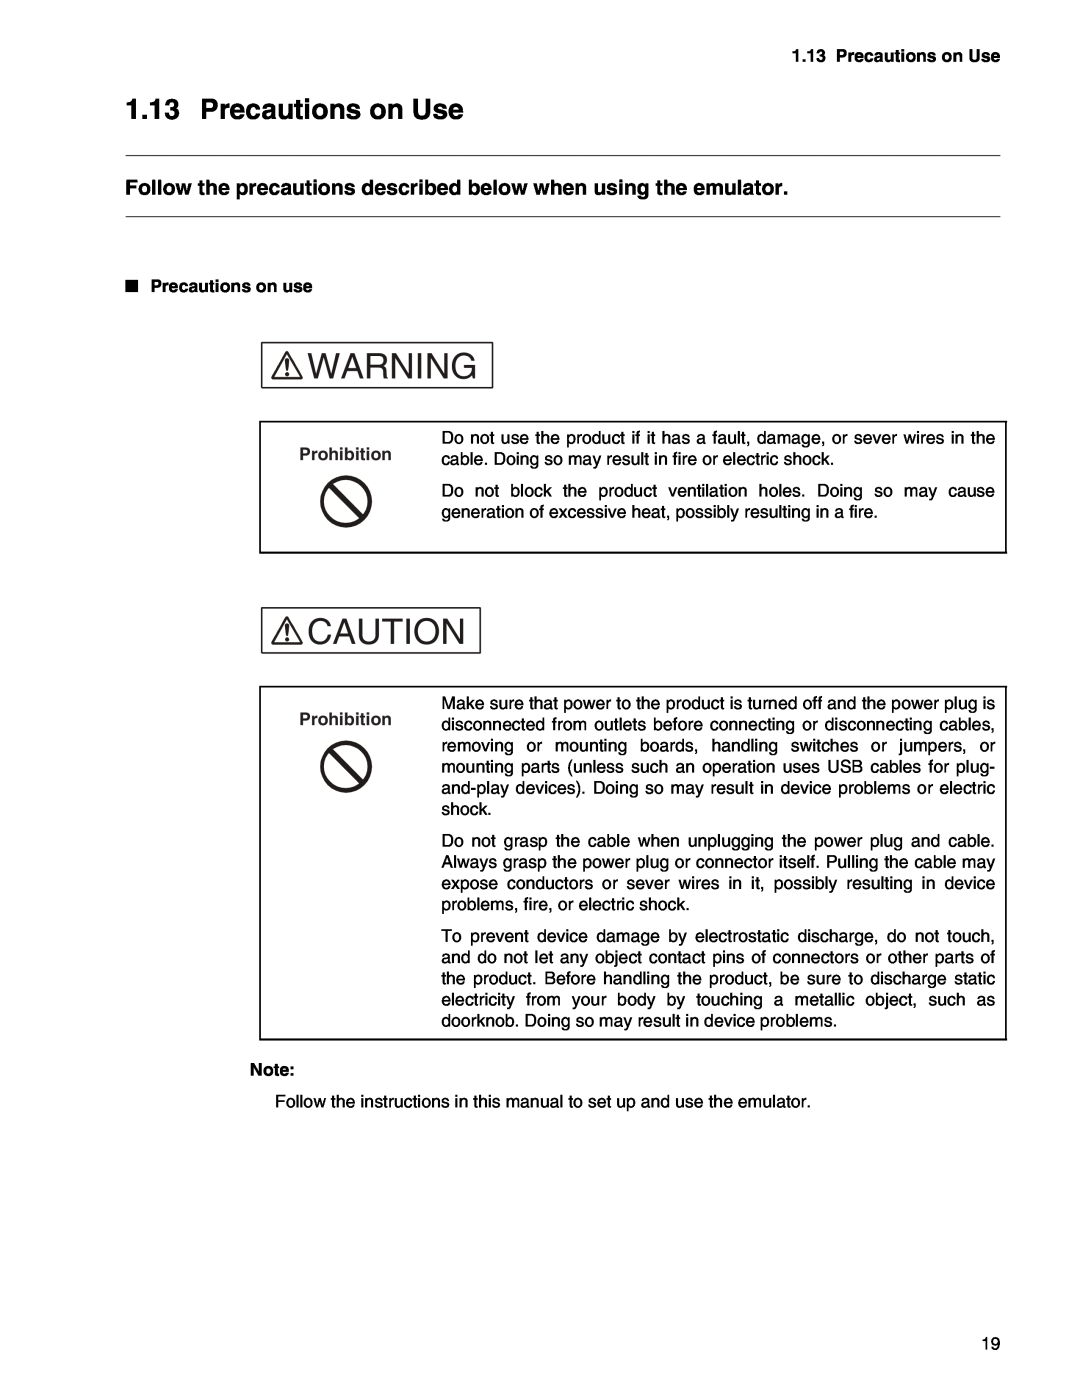 Fujitsu MB2147-01 Precautions on Use, Follow the precautions described below when using the emulator, Precautions on use 